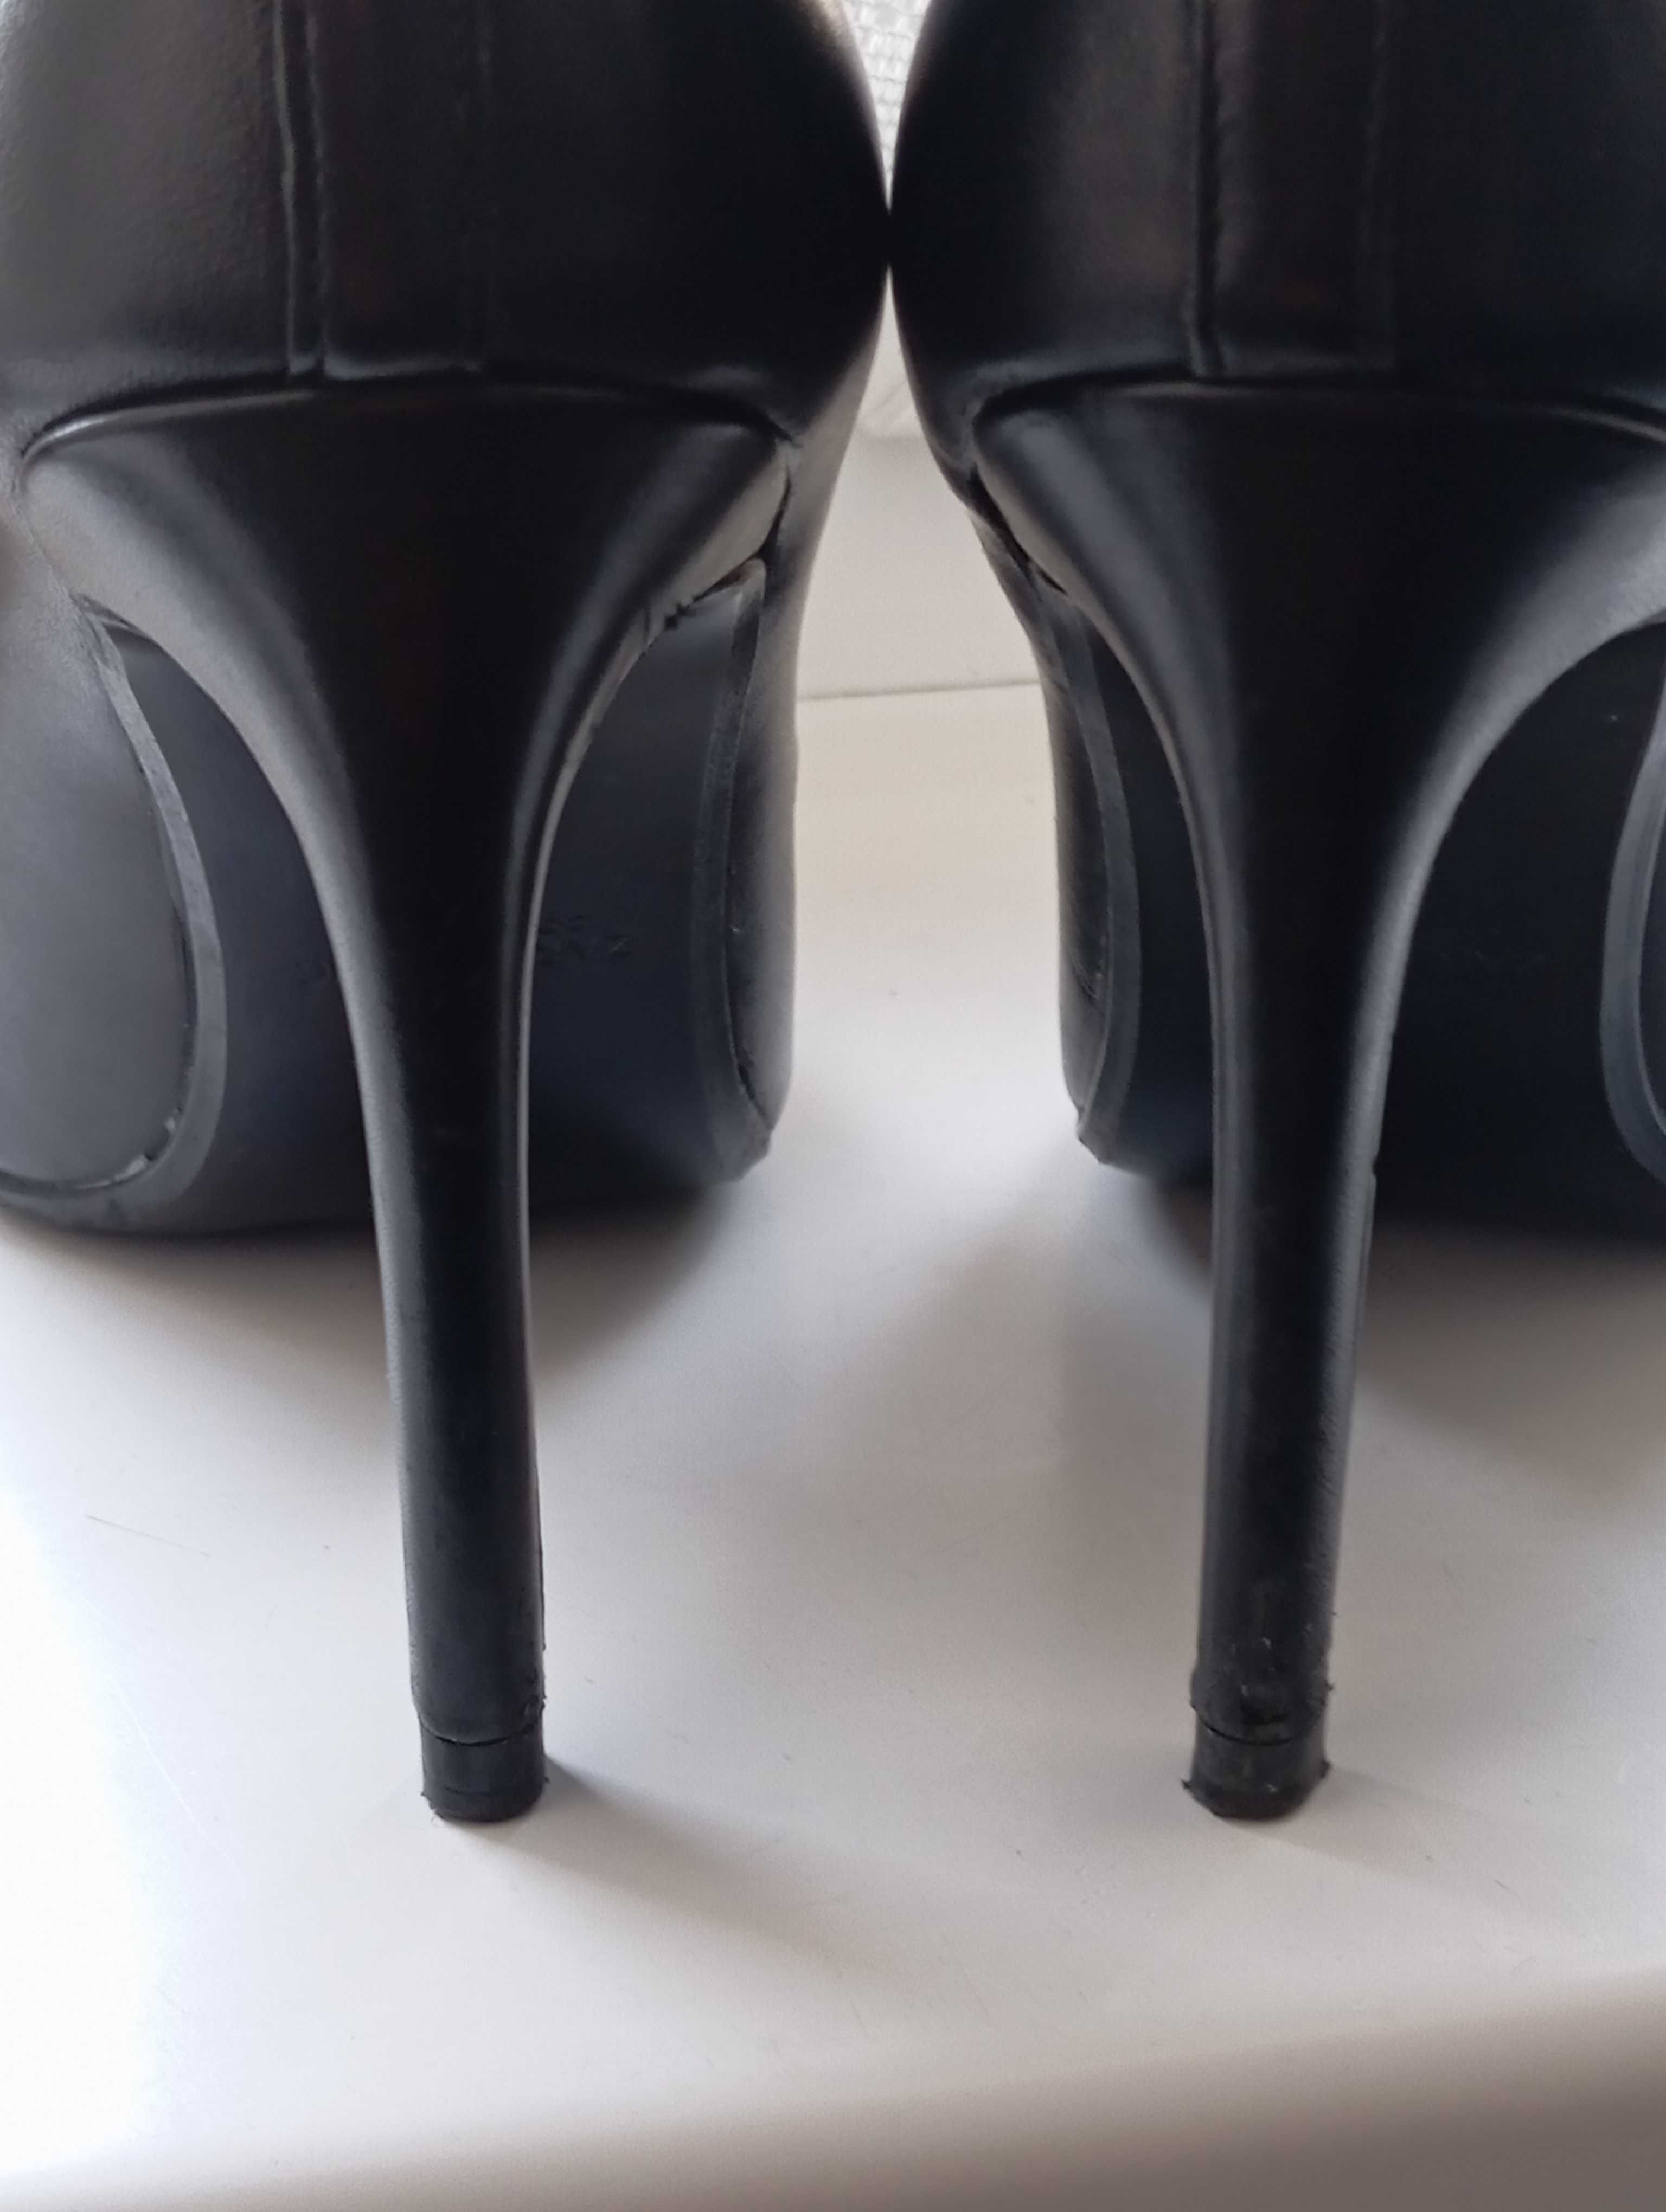 czarne damskie buty nr 37 letnie na obcasie wiązane na łydkach z Zary